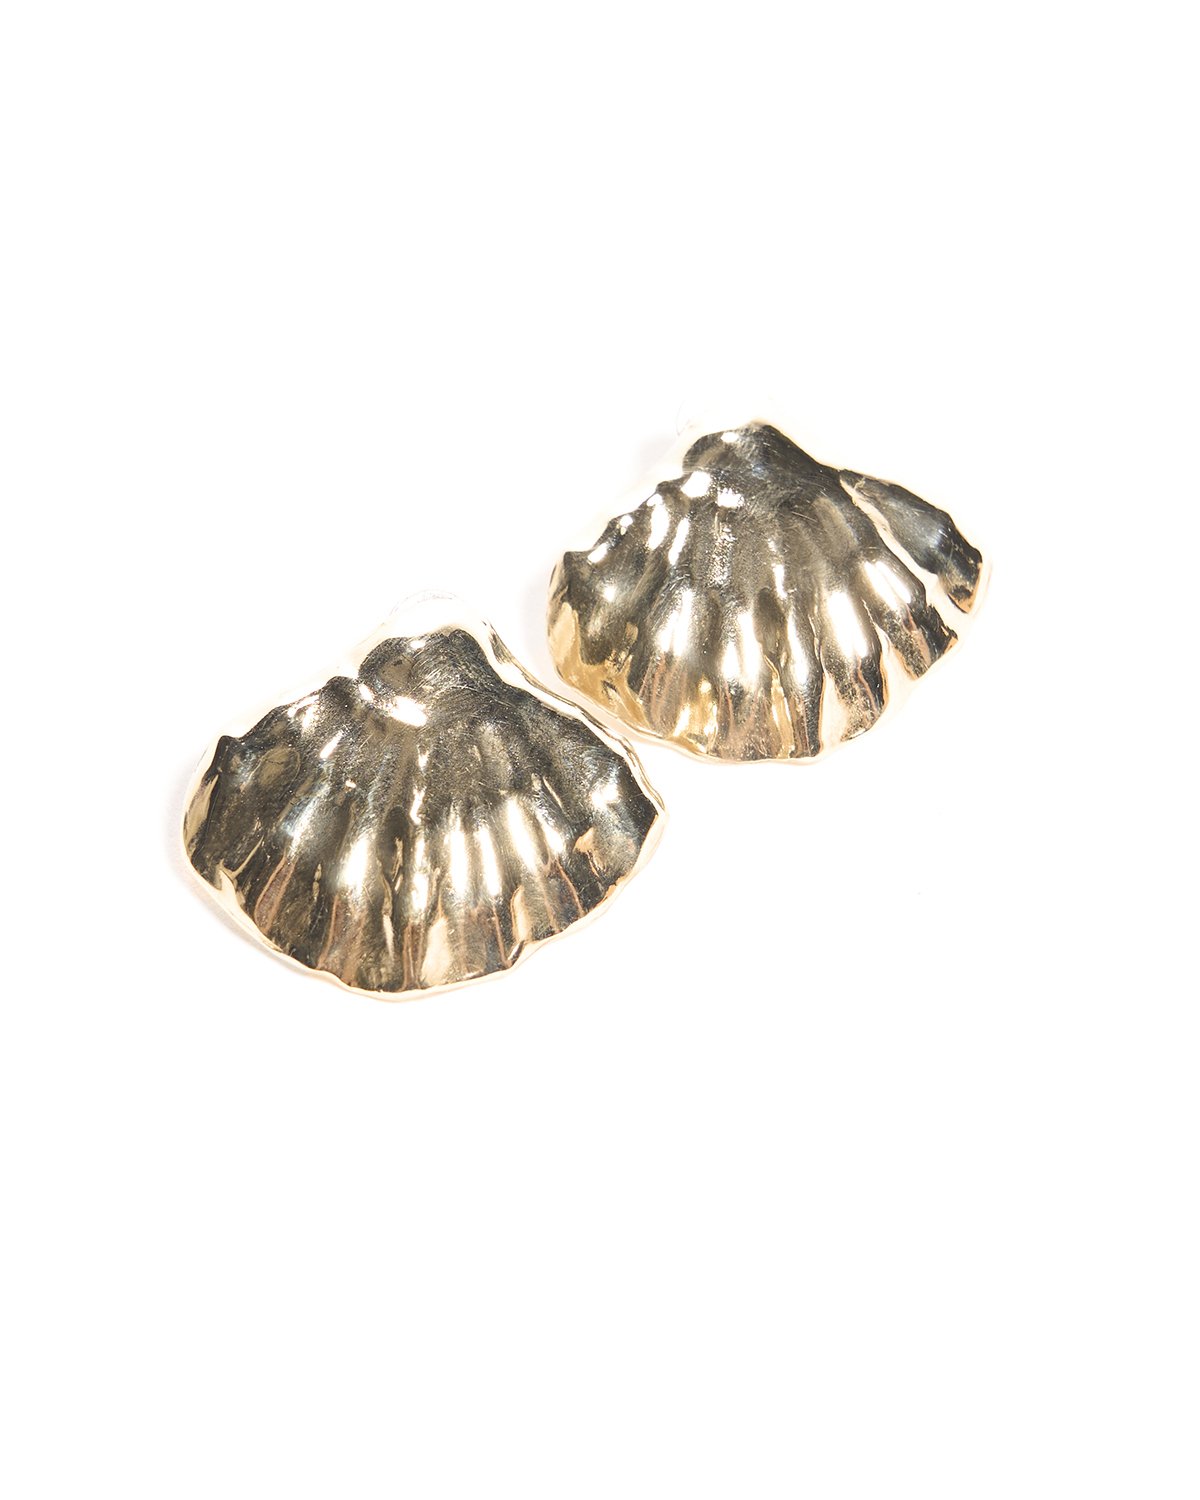 concha earrings